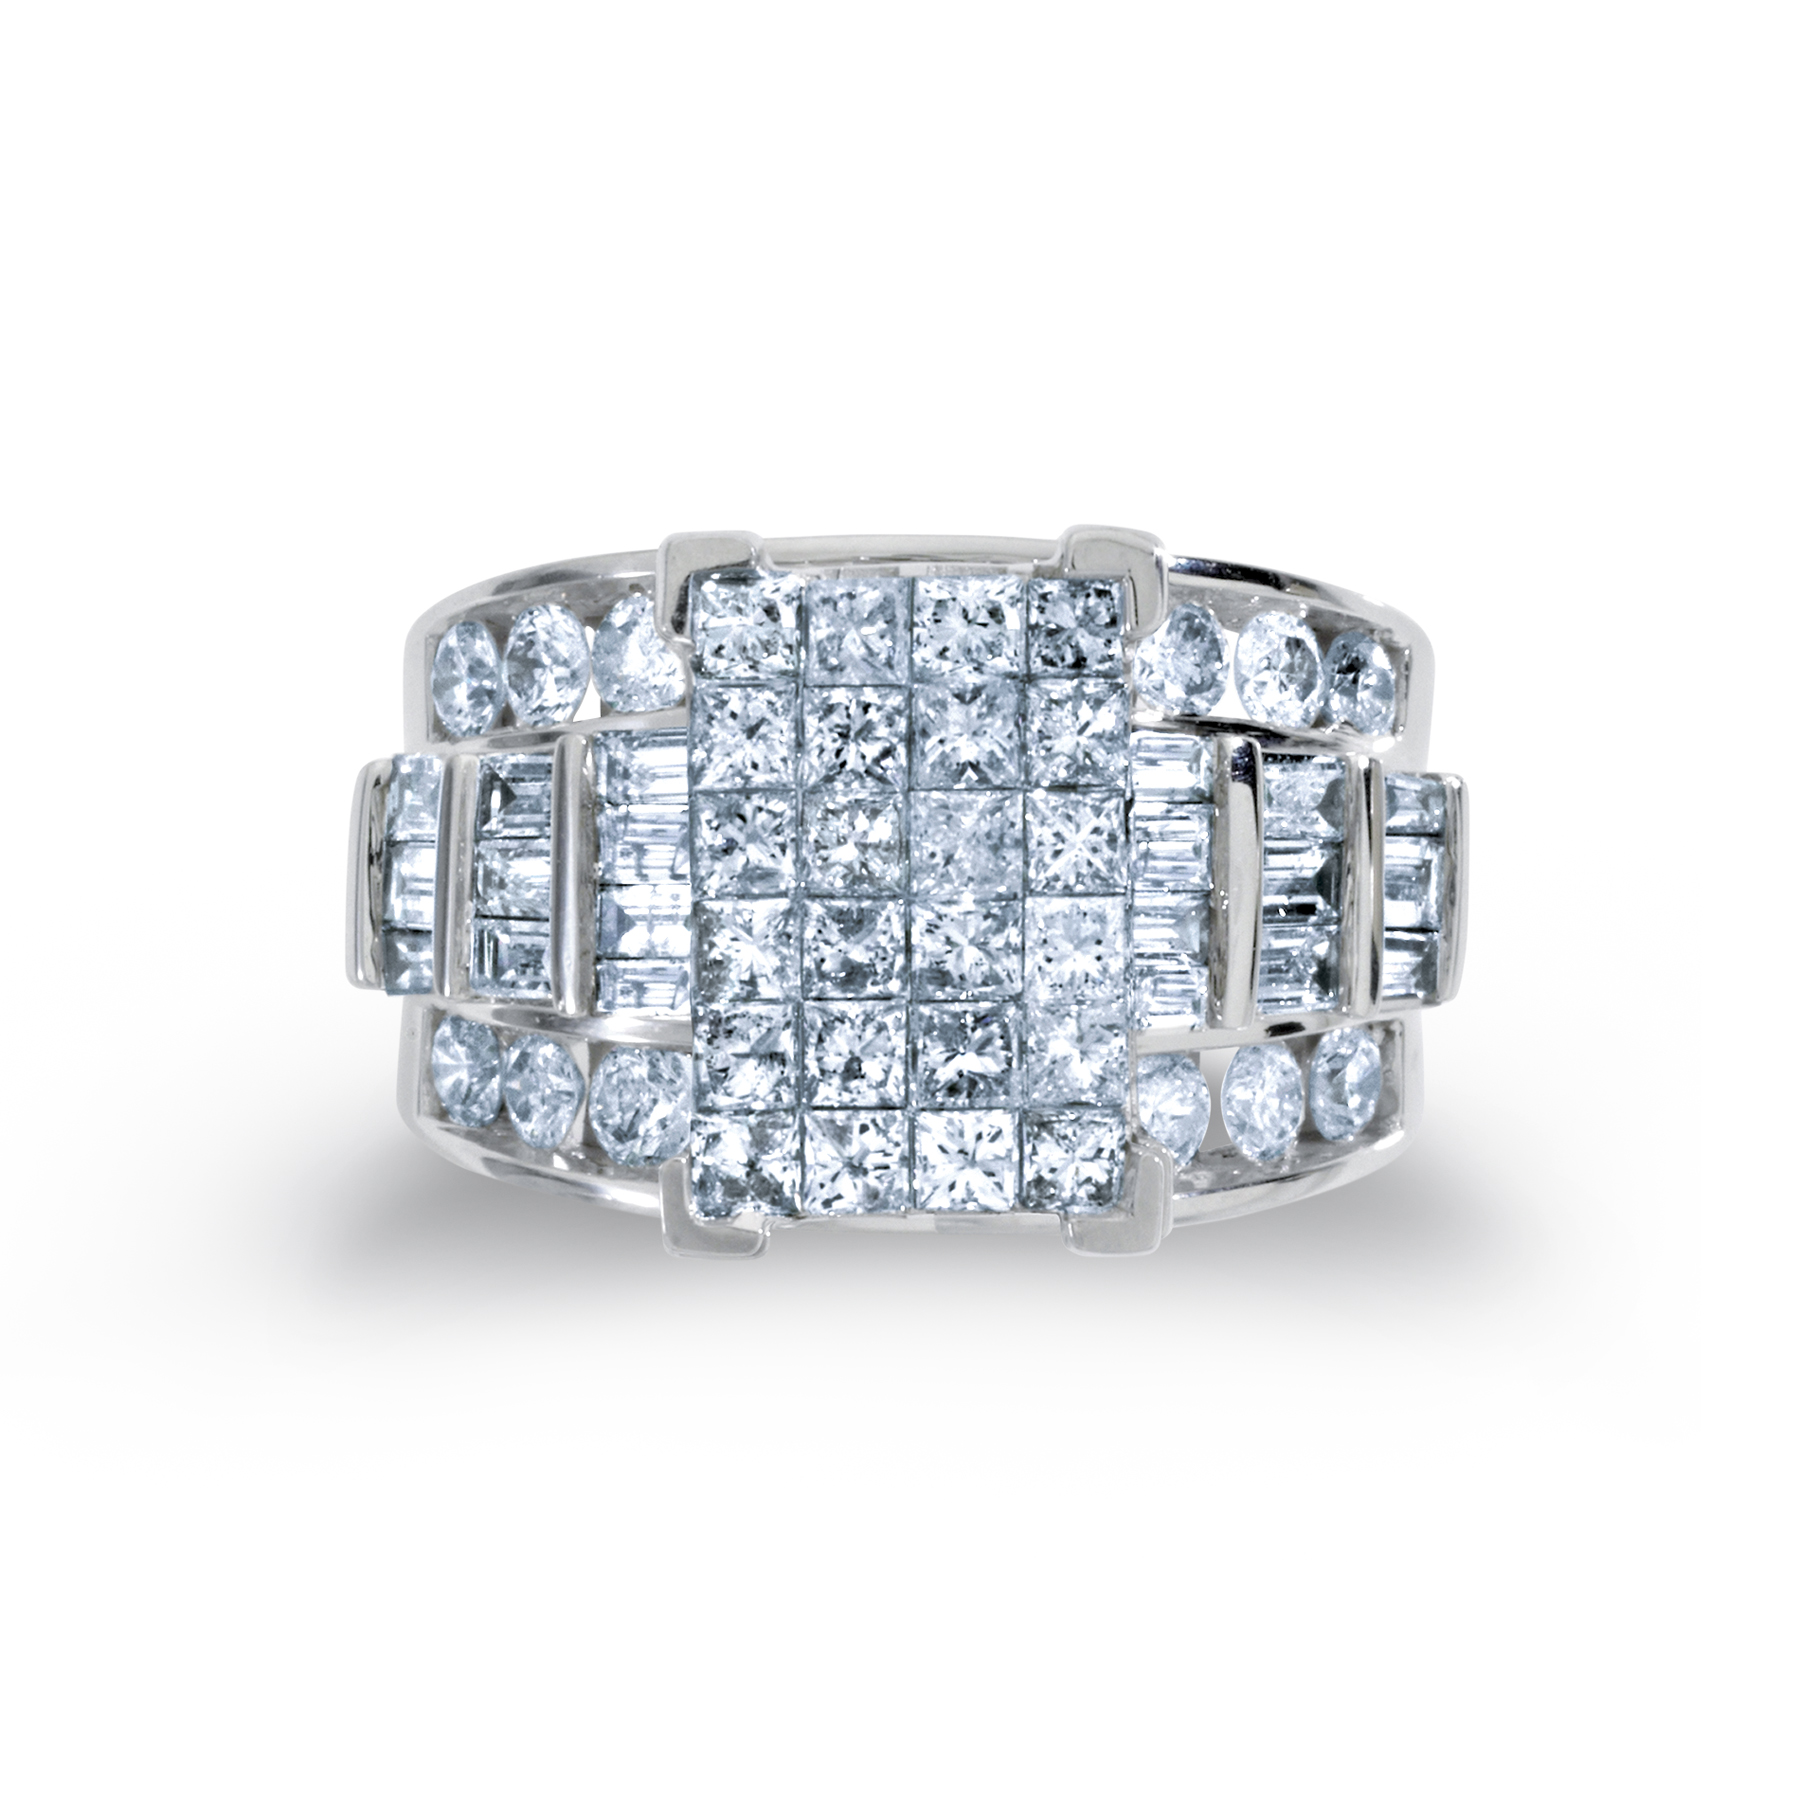 Tradition Diamond 4 Cttw. Certified Princess Cut 14k White Gold Diamond Engagement Ring